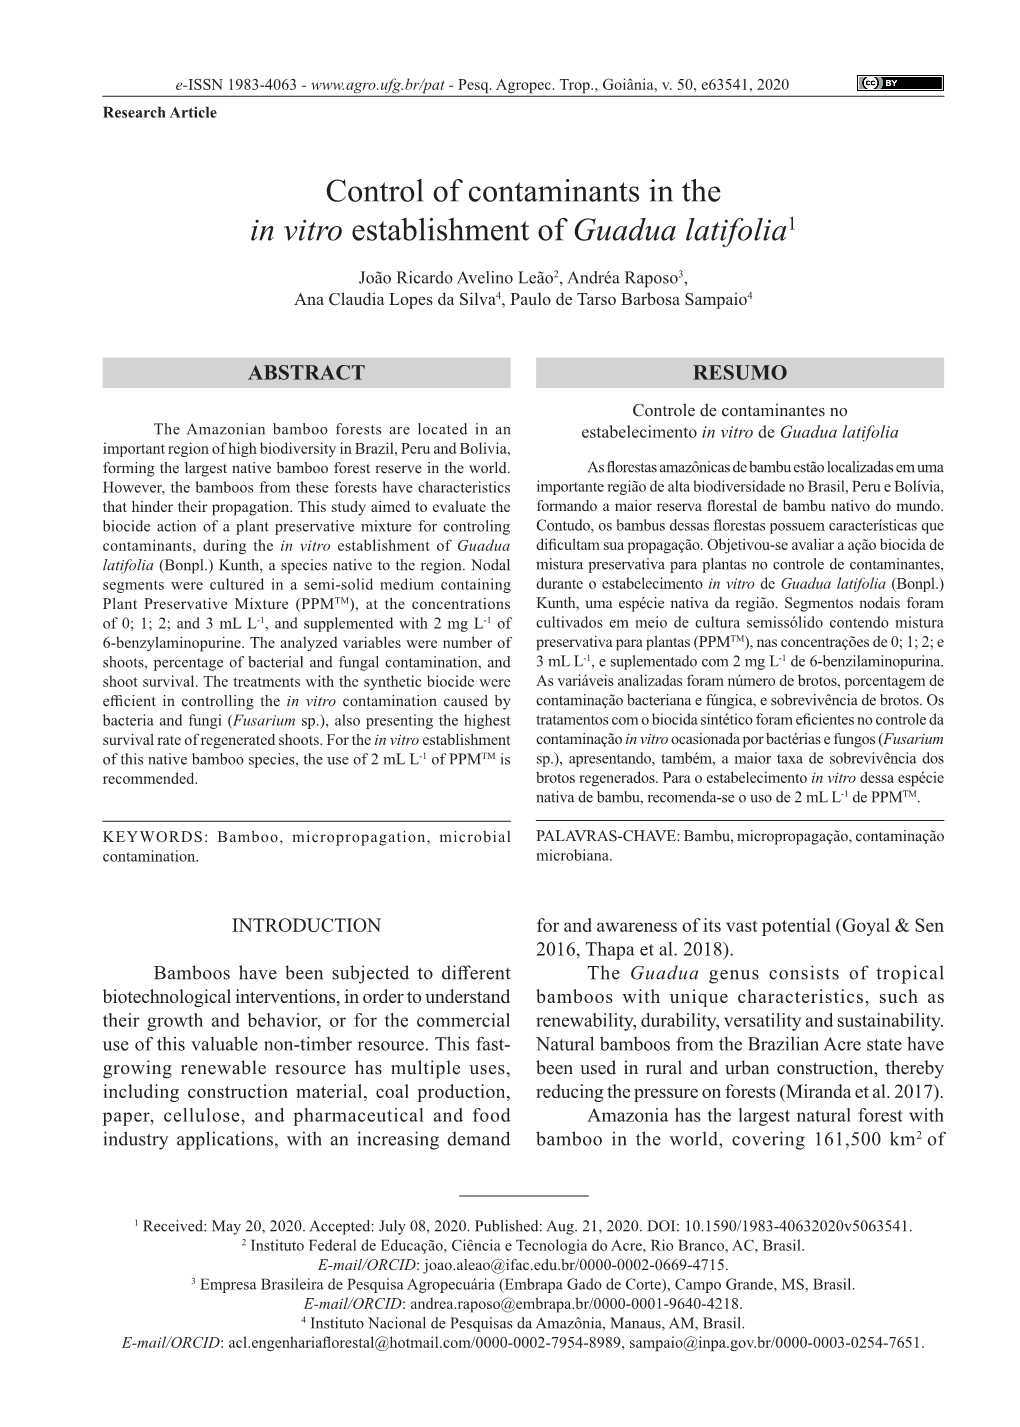 Control of Contaminants in the in Vitro Establishment of Guadua Latifolia1